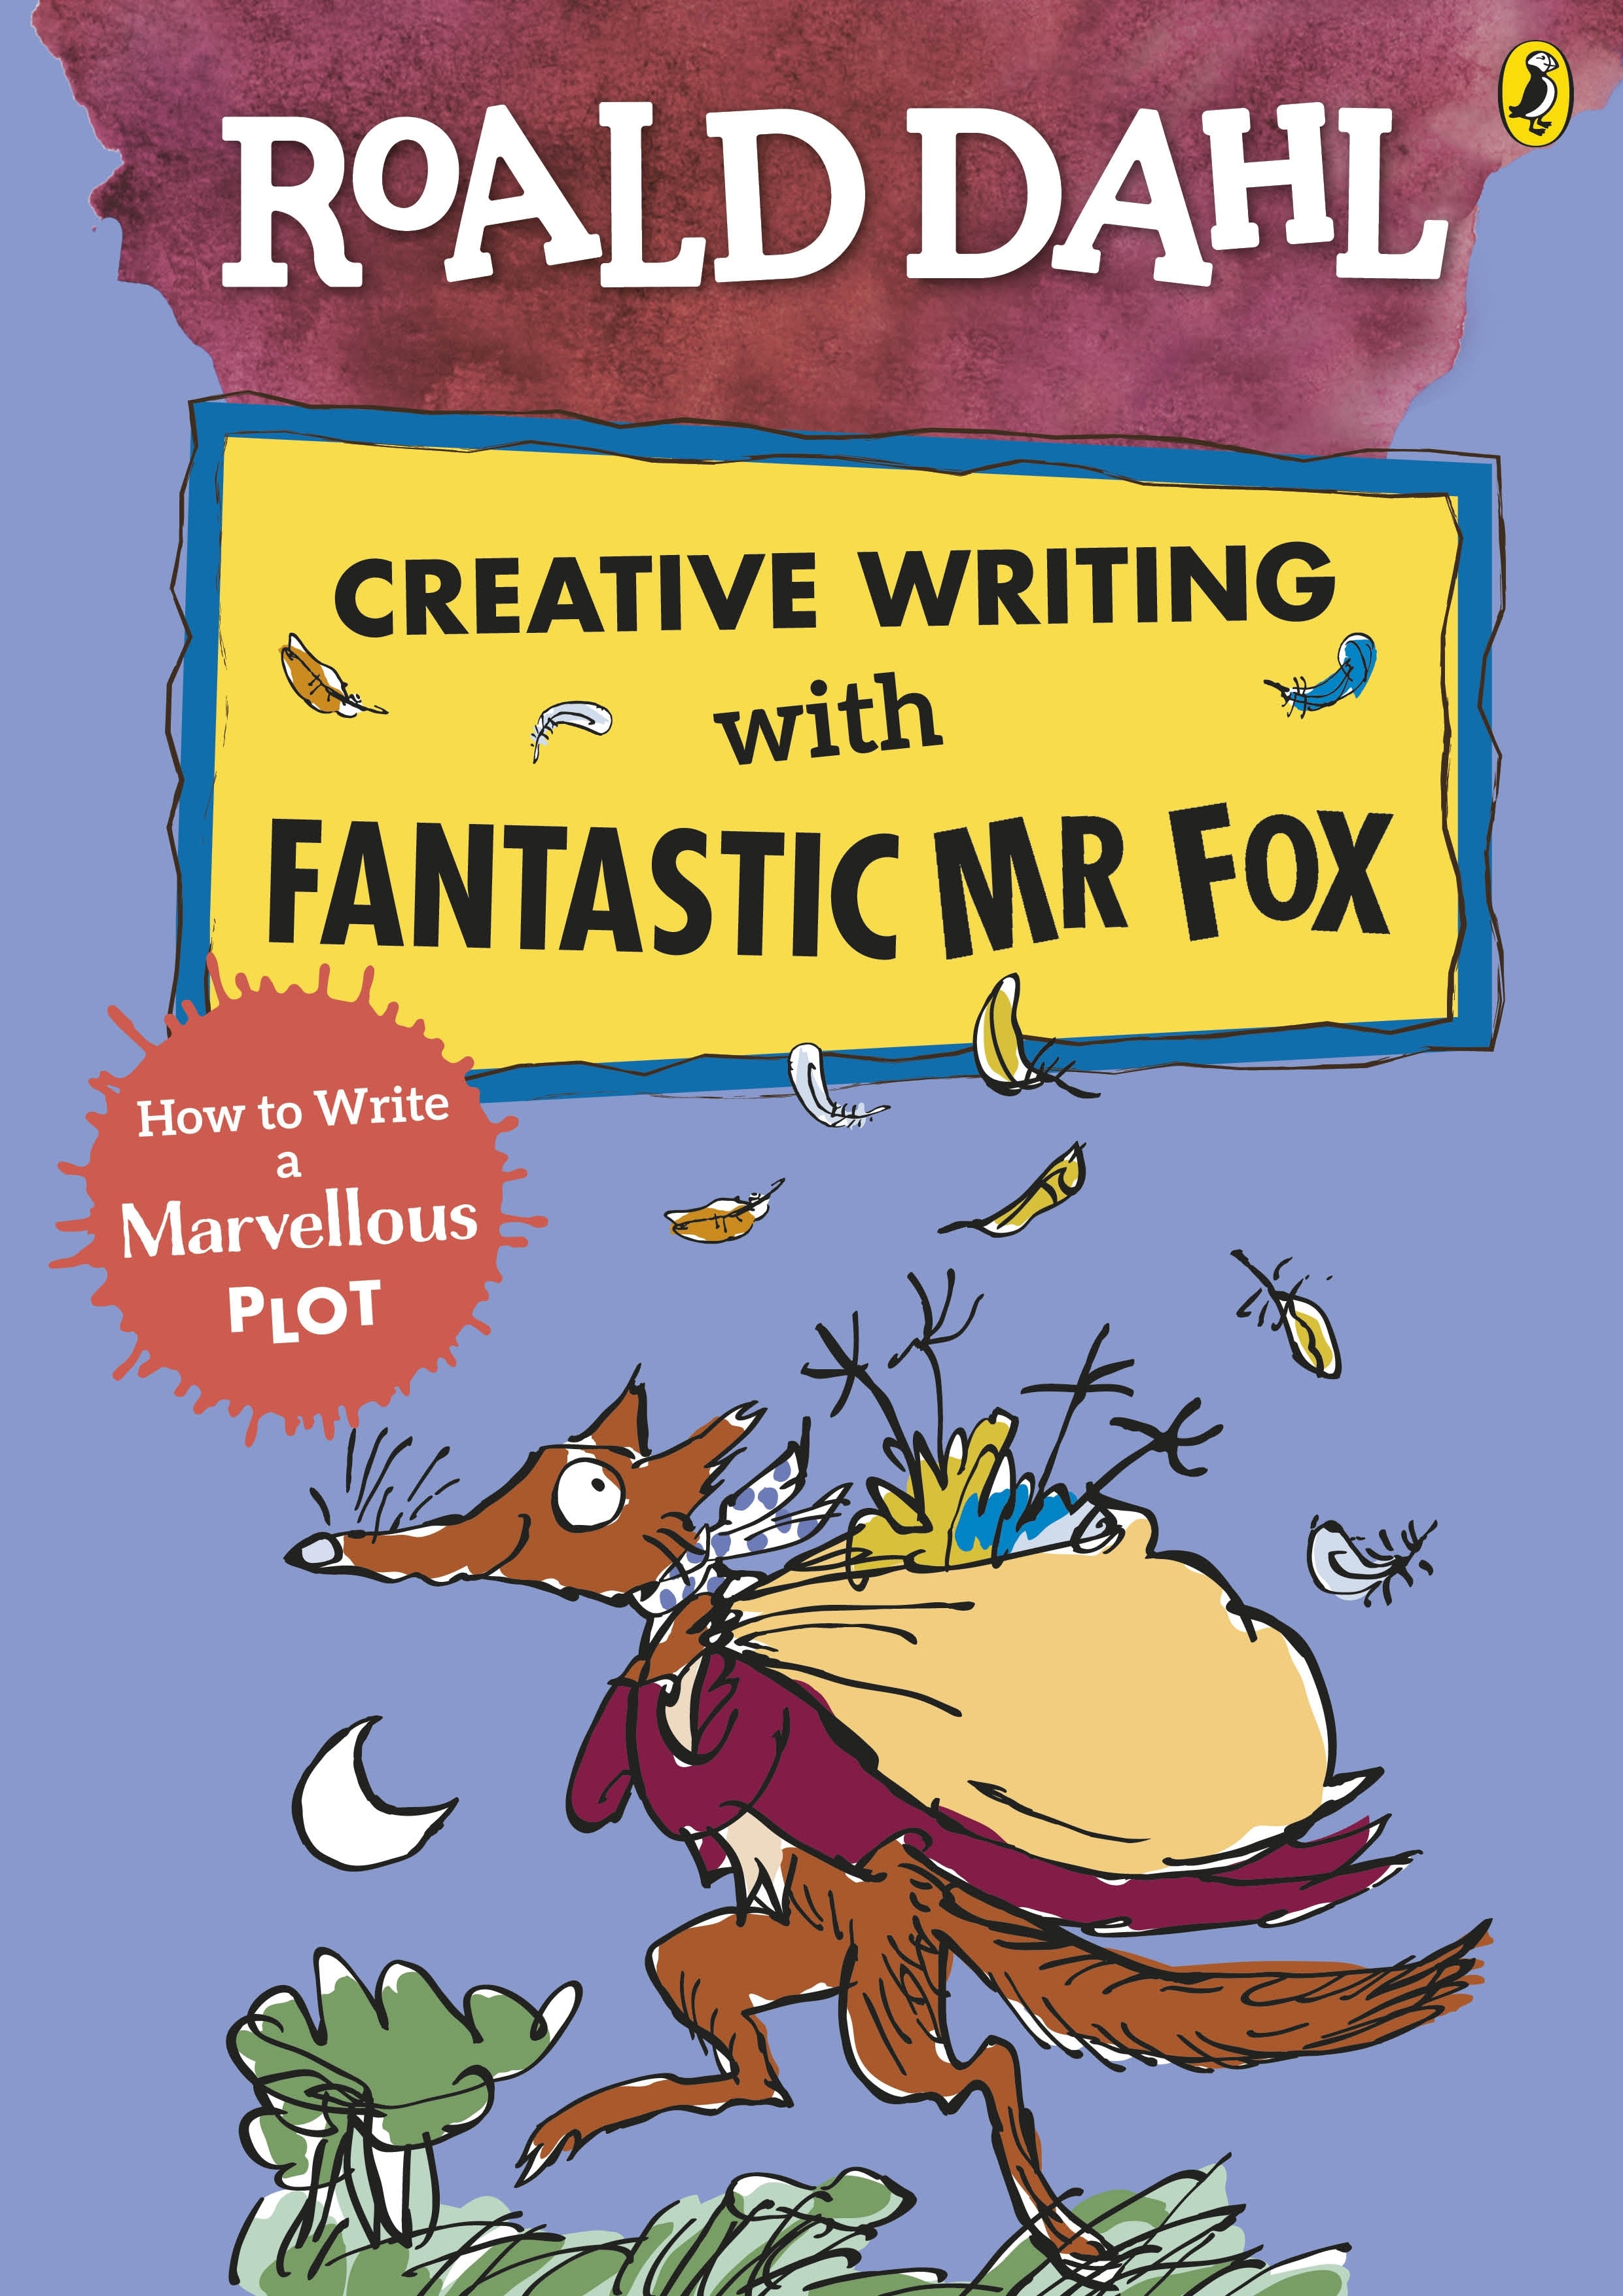 Book “Roald Dahl Creative Writing with Fantastic Mr Fox: How to Write a Marvellous Plot” by Roald Dahl — January 23, 2020